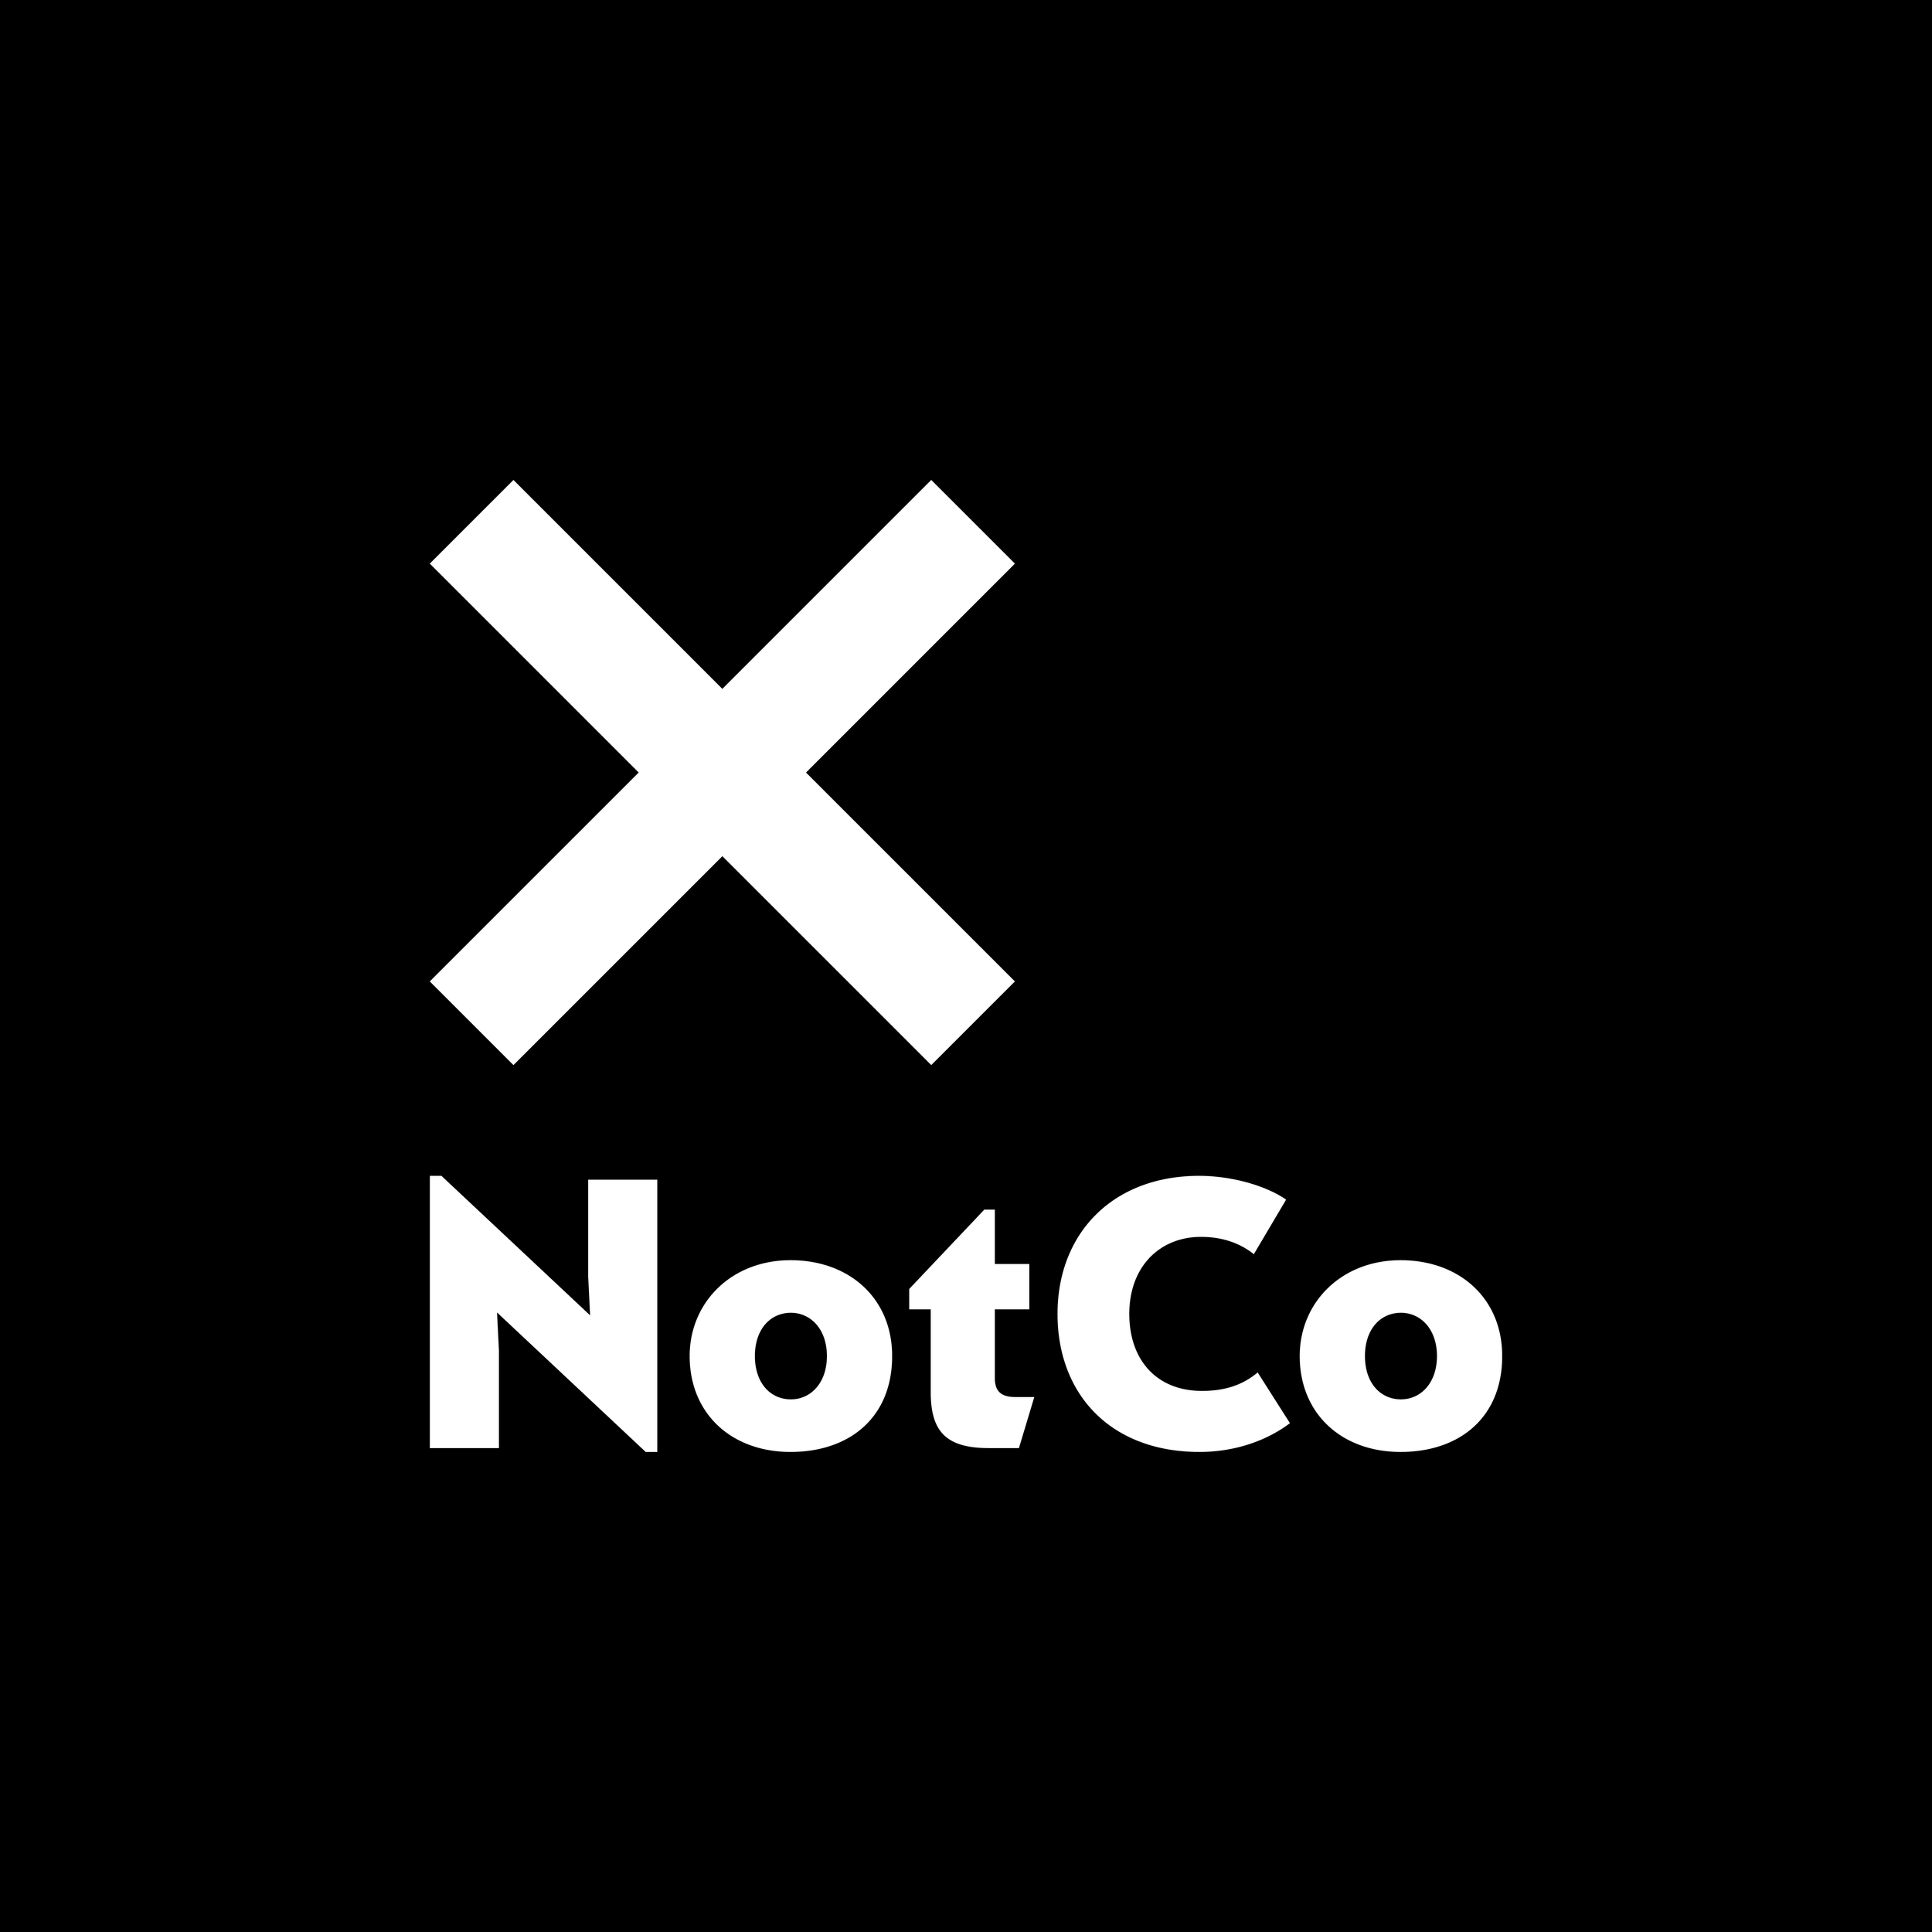 Logo NotCo_Black (1).png